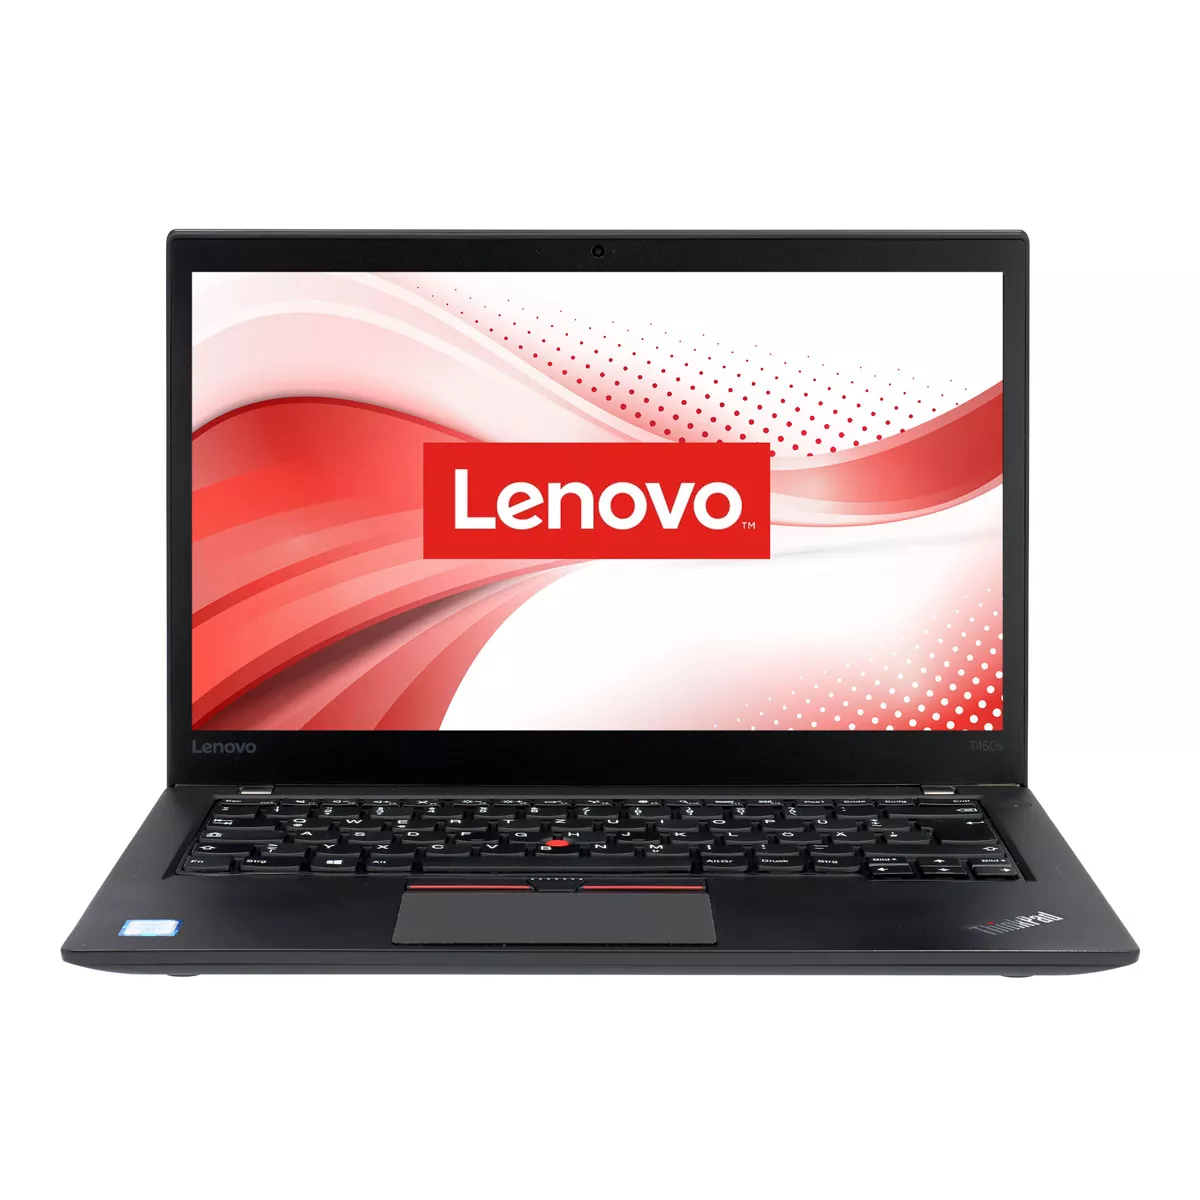 Lenovo ThinkPad T460s Core i5 6300U Full-HD 8 GB 256 GB SSD Webcam A+